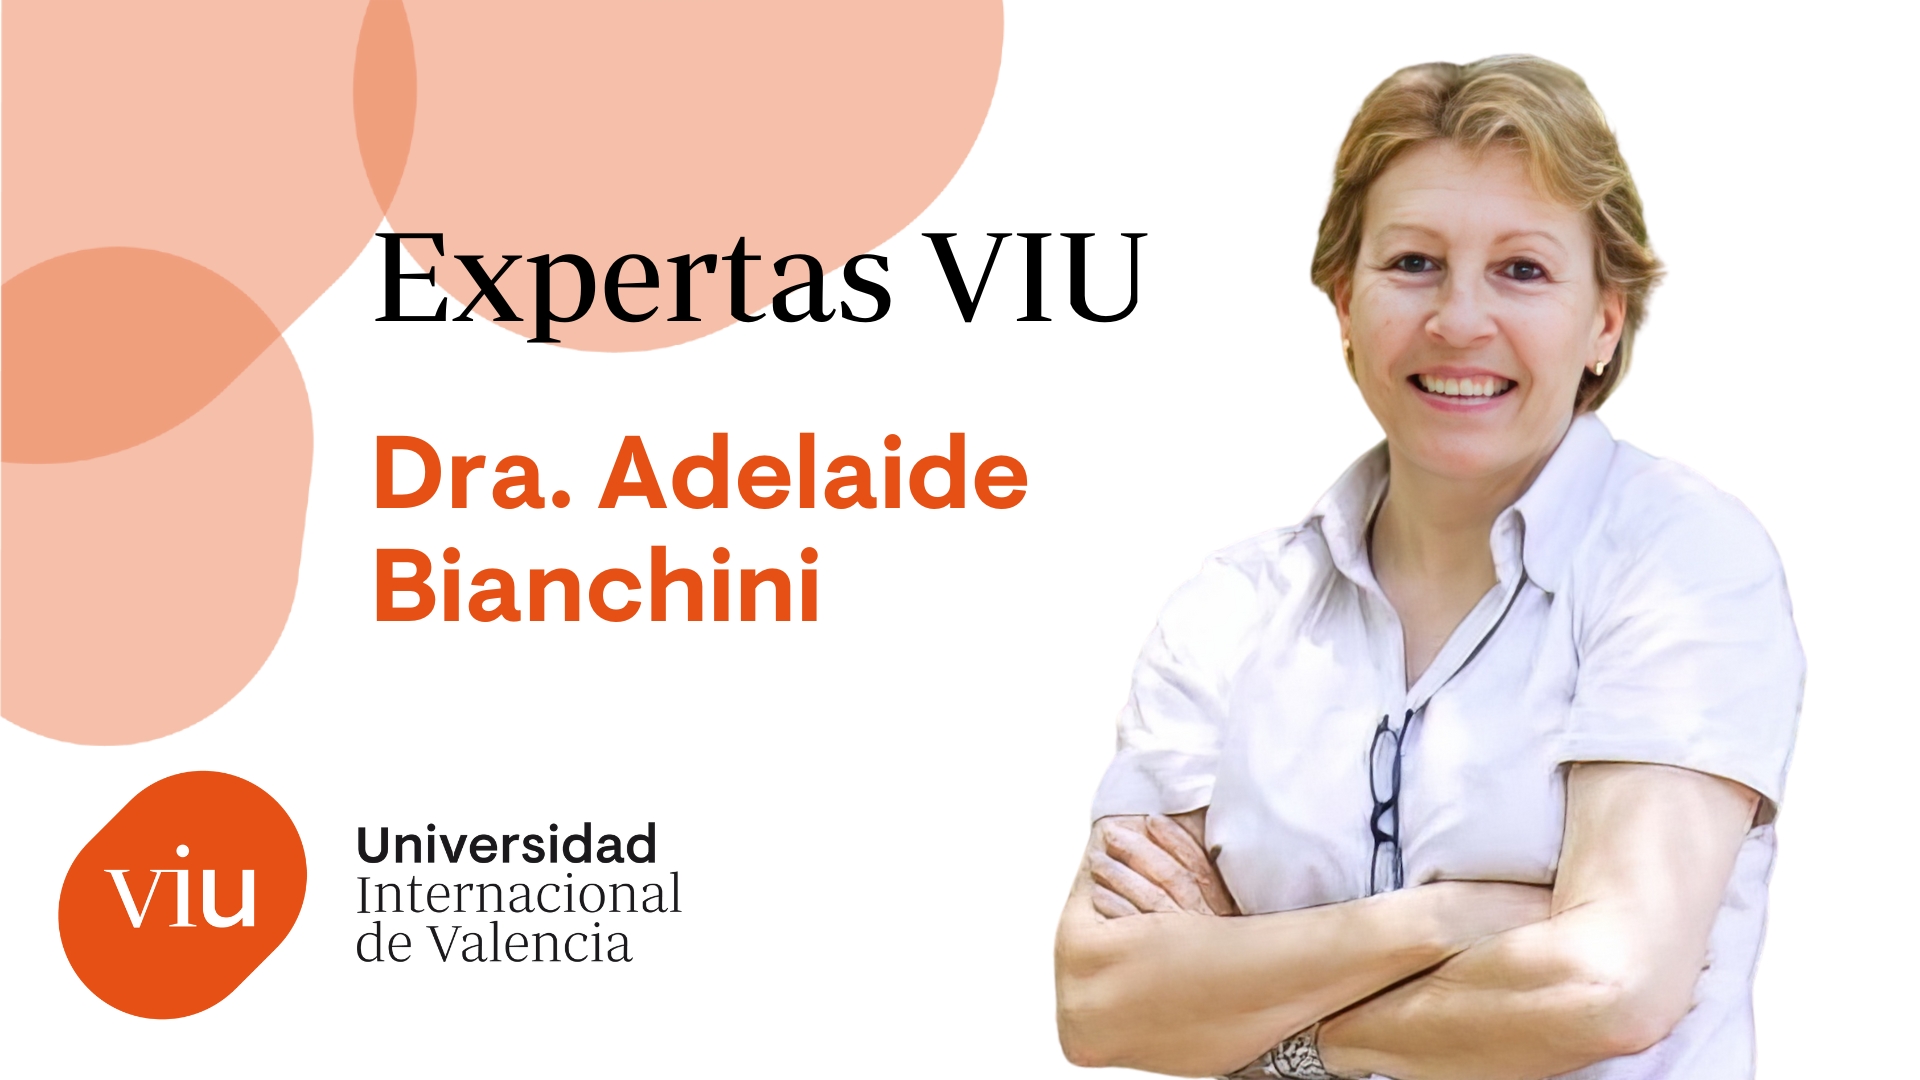 Dra. Adelaide Bianchini VIU 